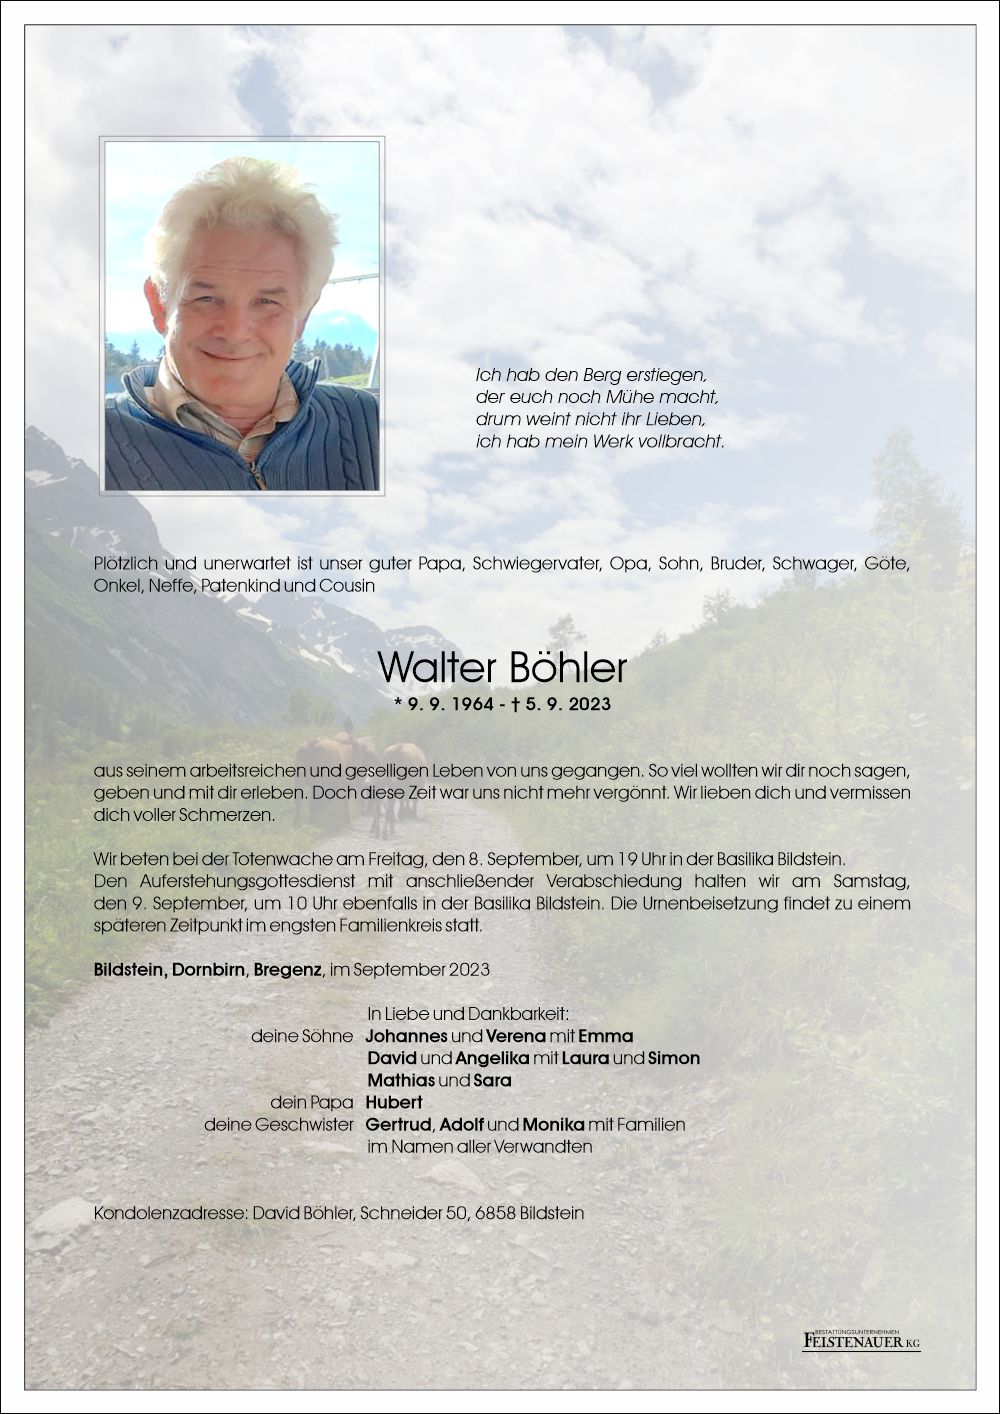 Walter Böhler